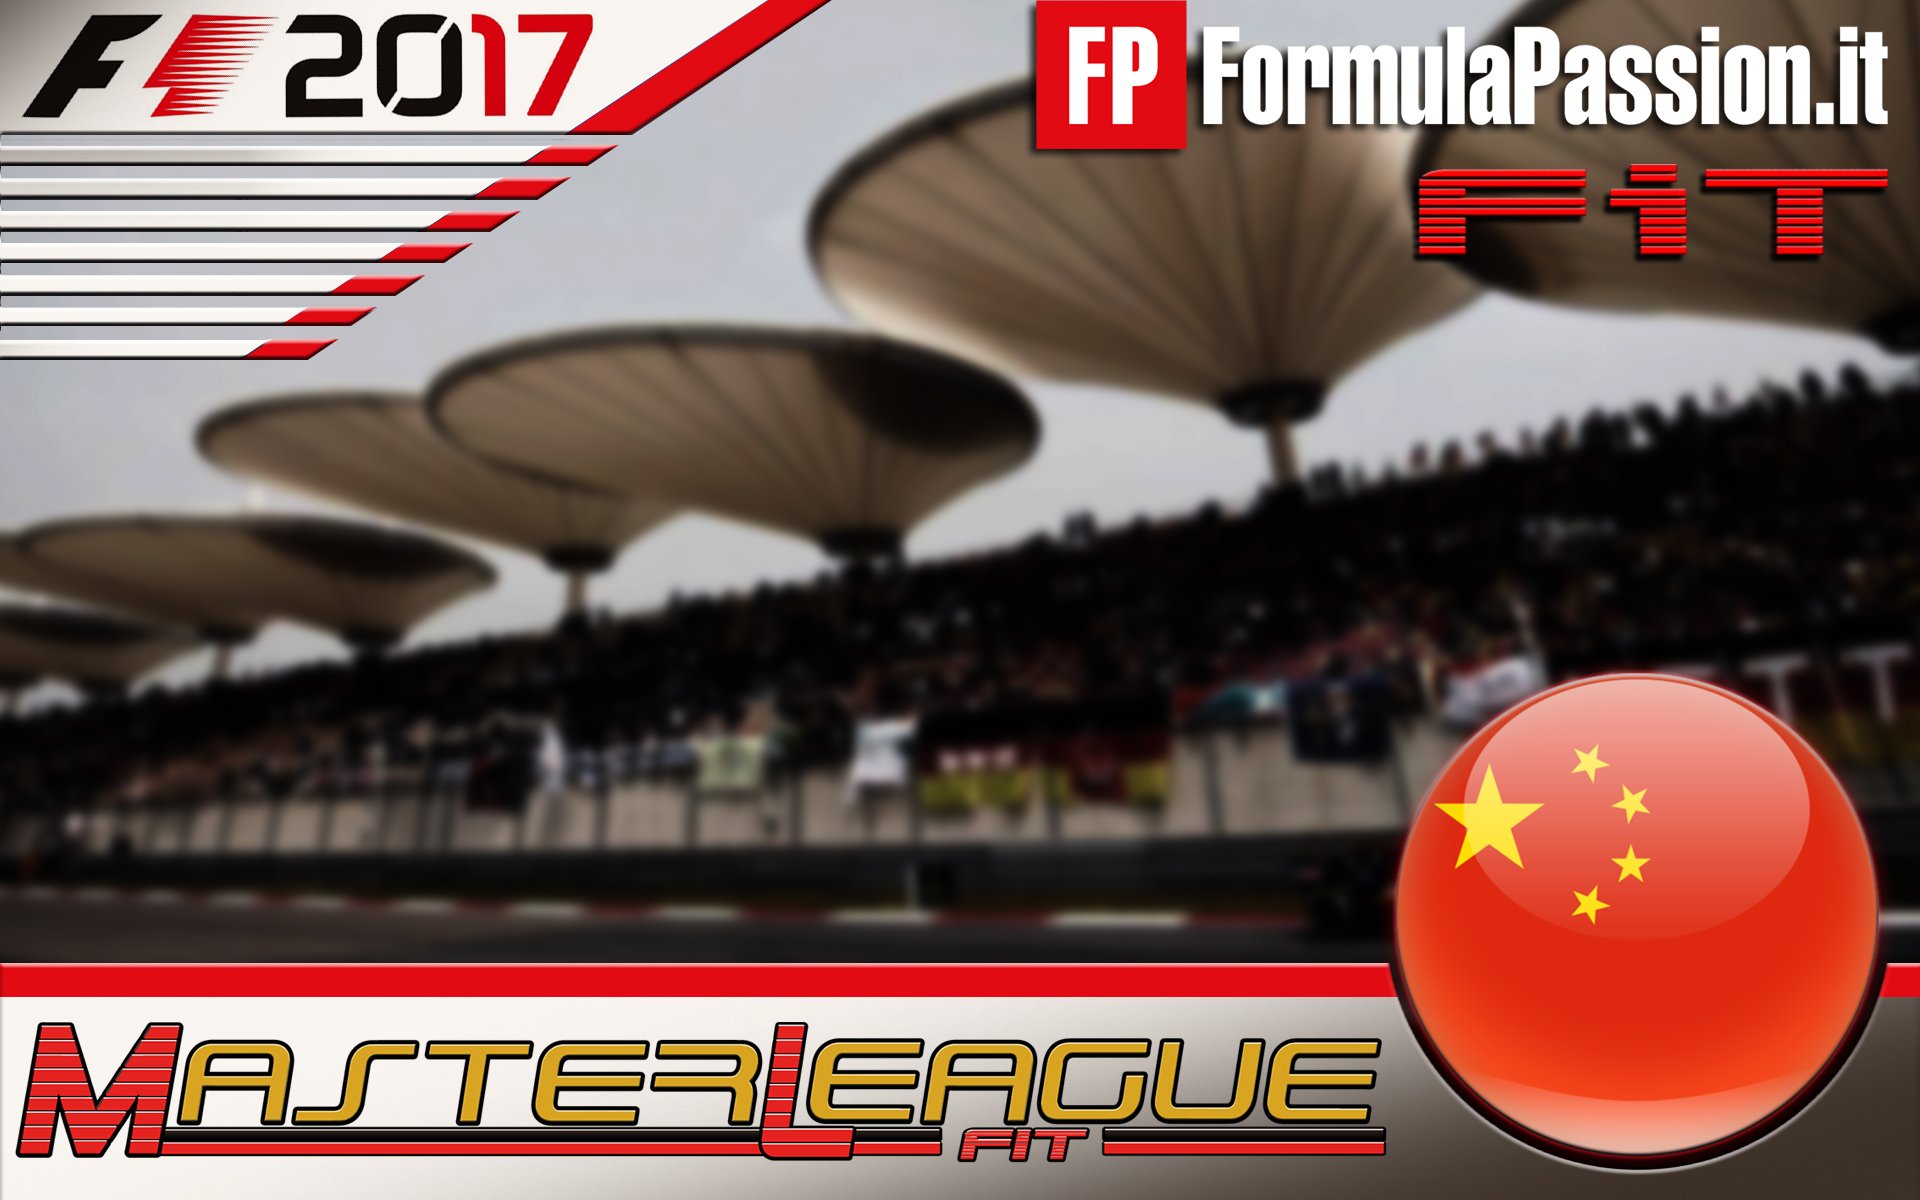 More information about "Master League FormulaPassion: questa sera secondo appuntamento in Cina"